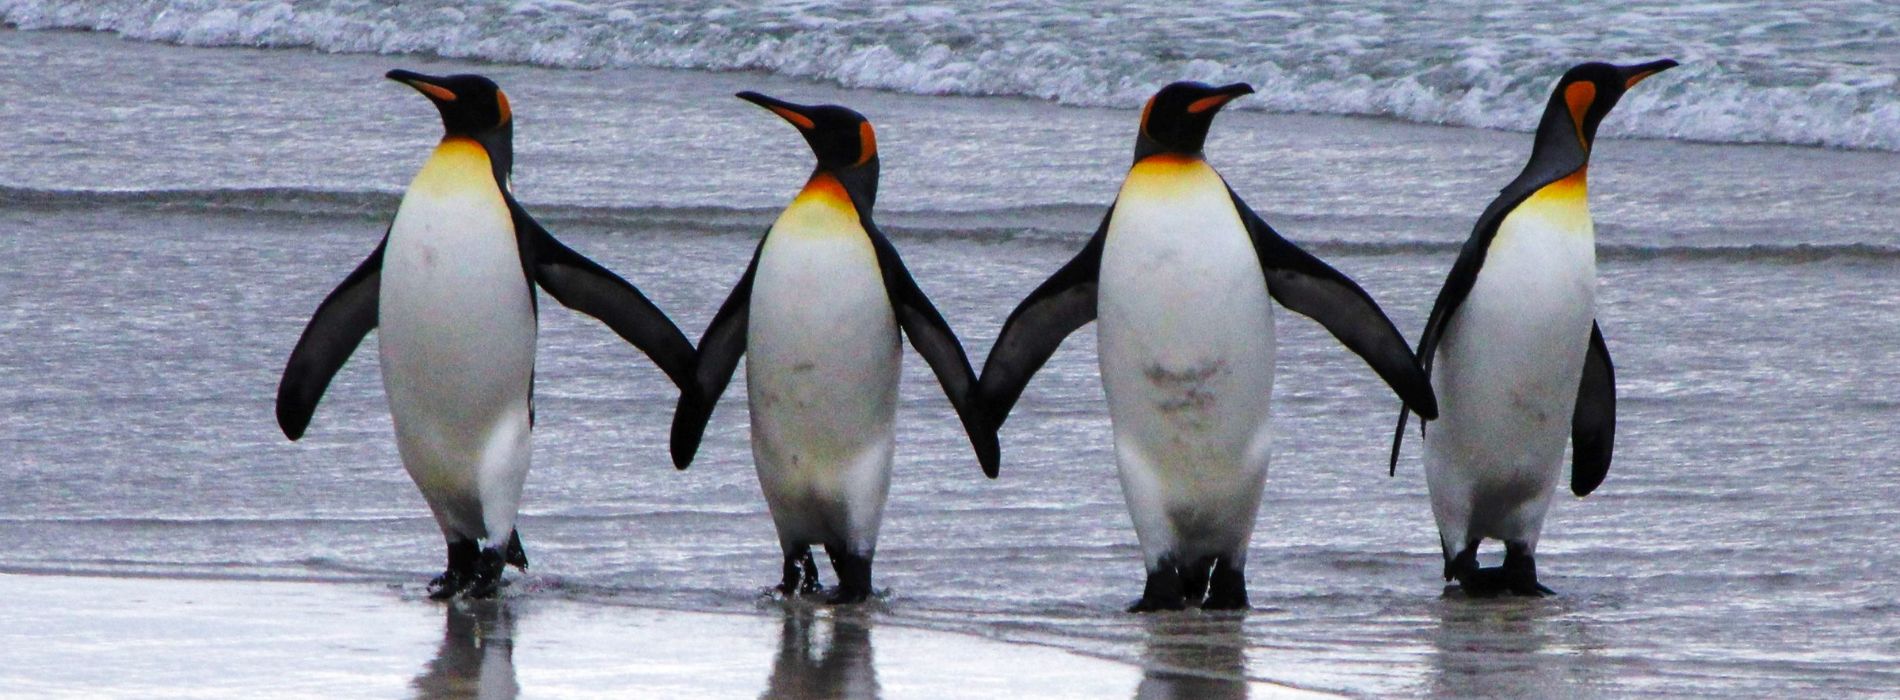 What do penguins symbolize?